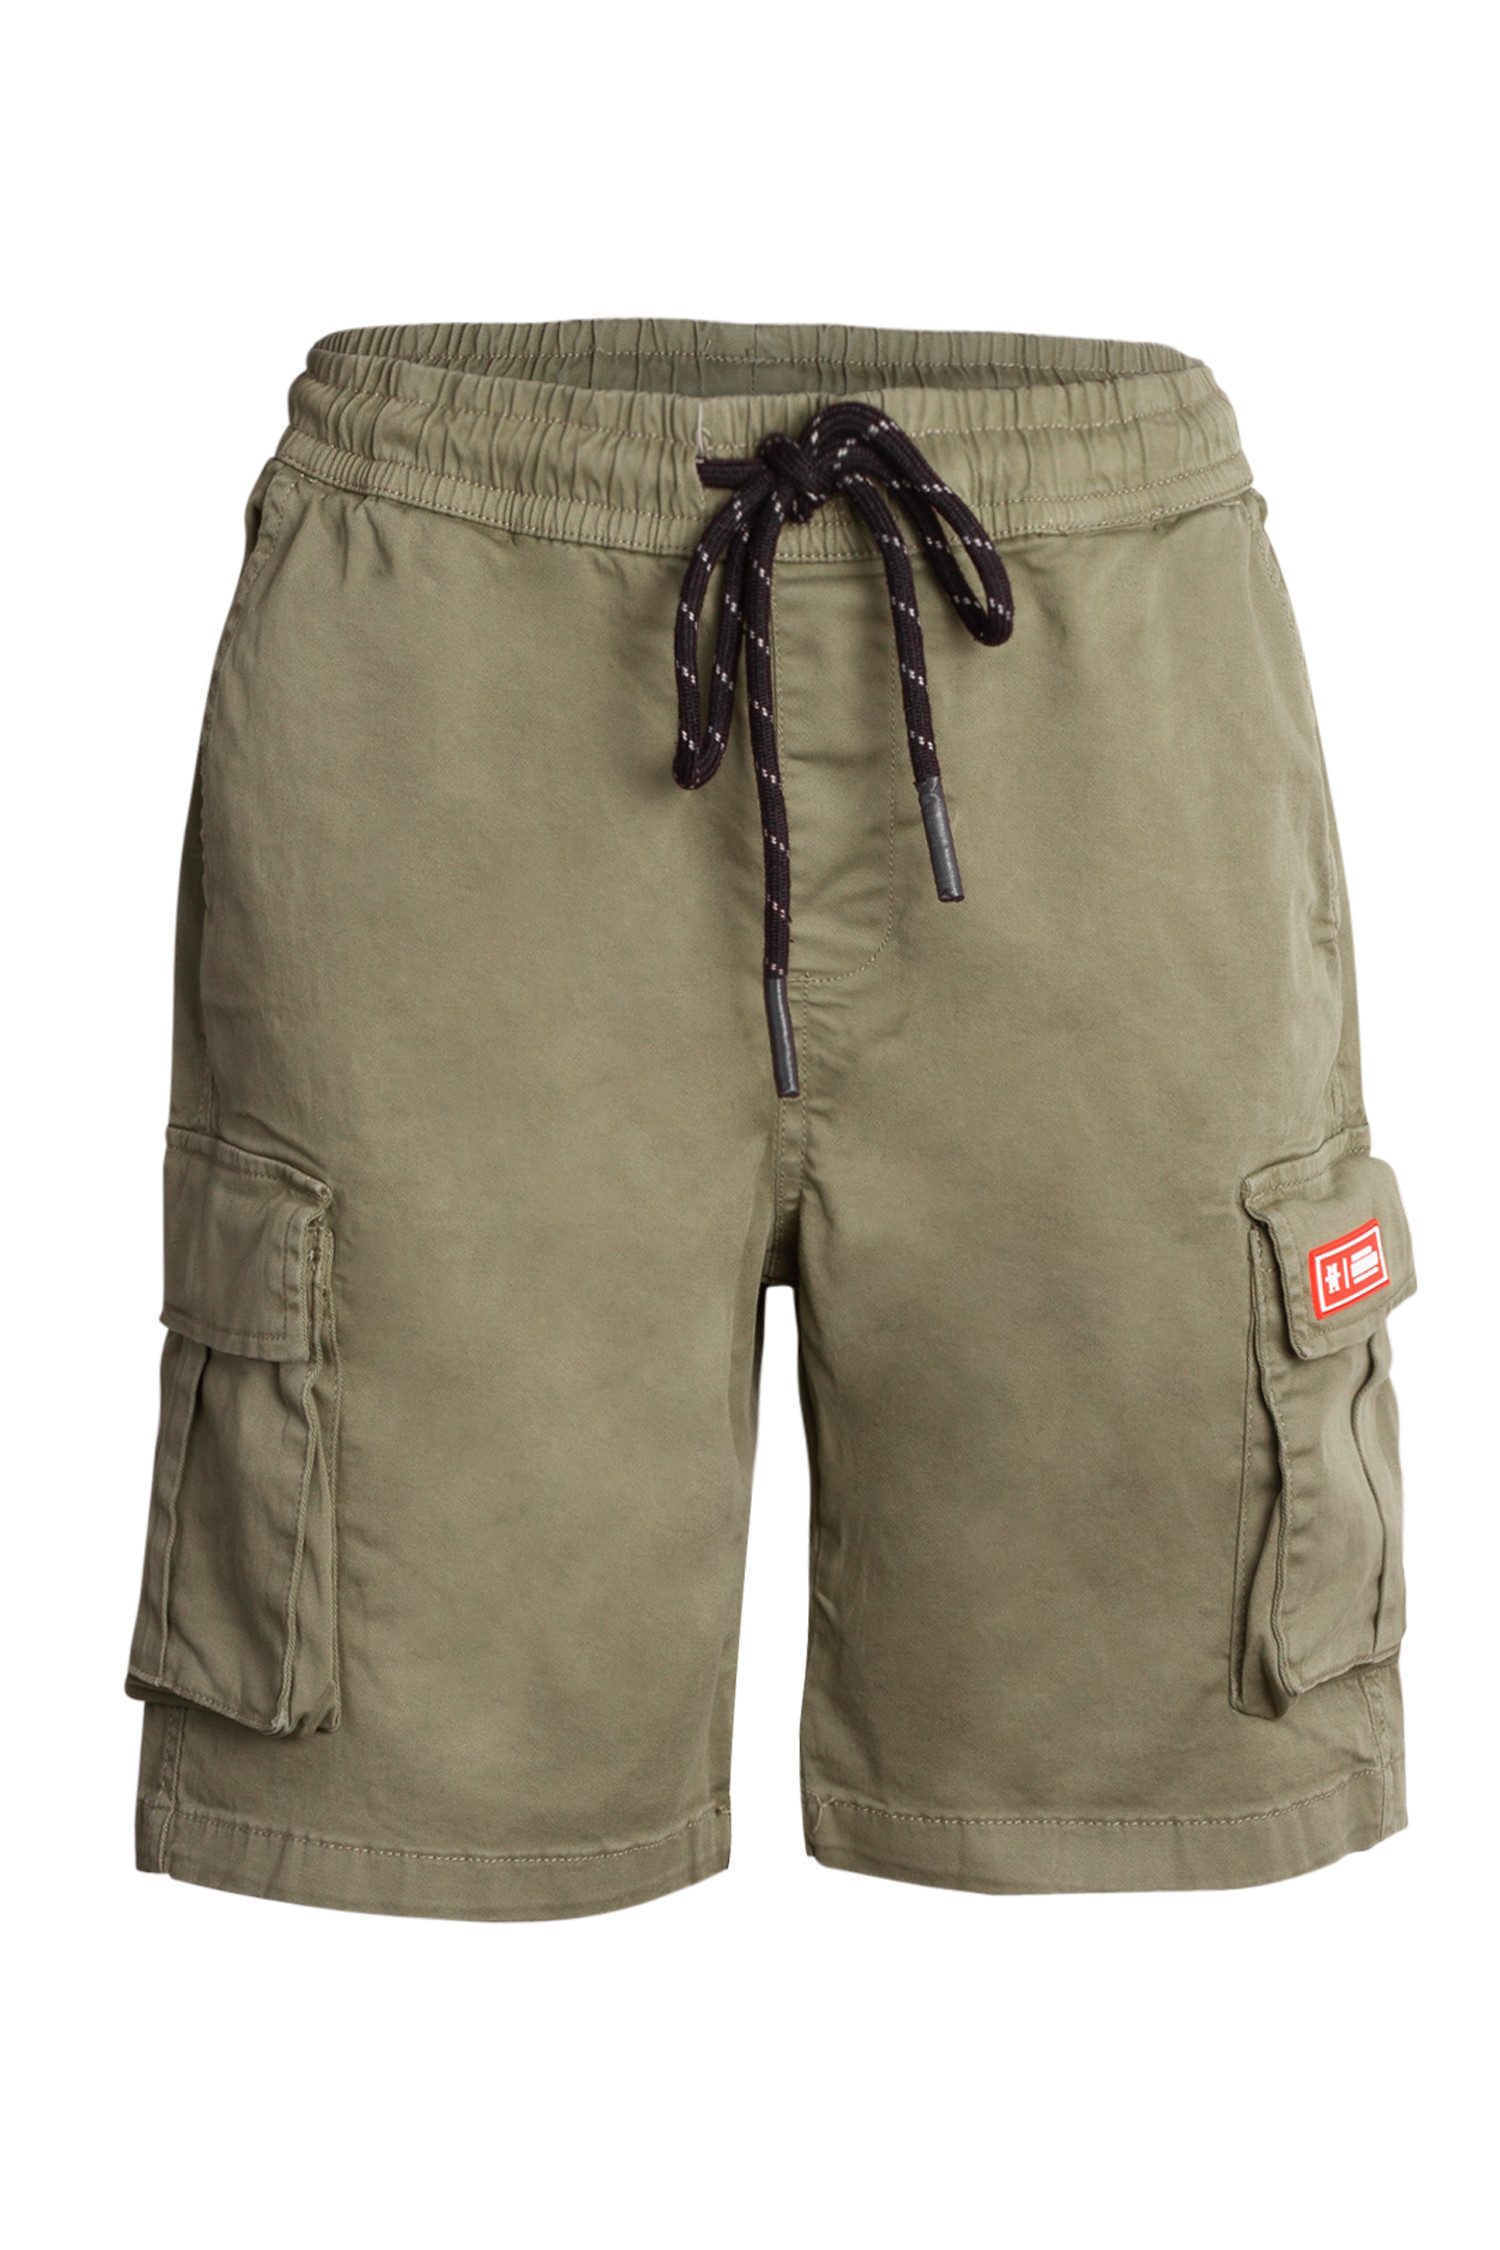 Manufaktur13 Cargoshorts - Kurze Hose aus dehnbarem Stretch Twill, Cargo Shorts, Pants mit Kordelzug